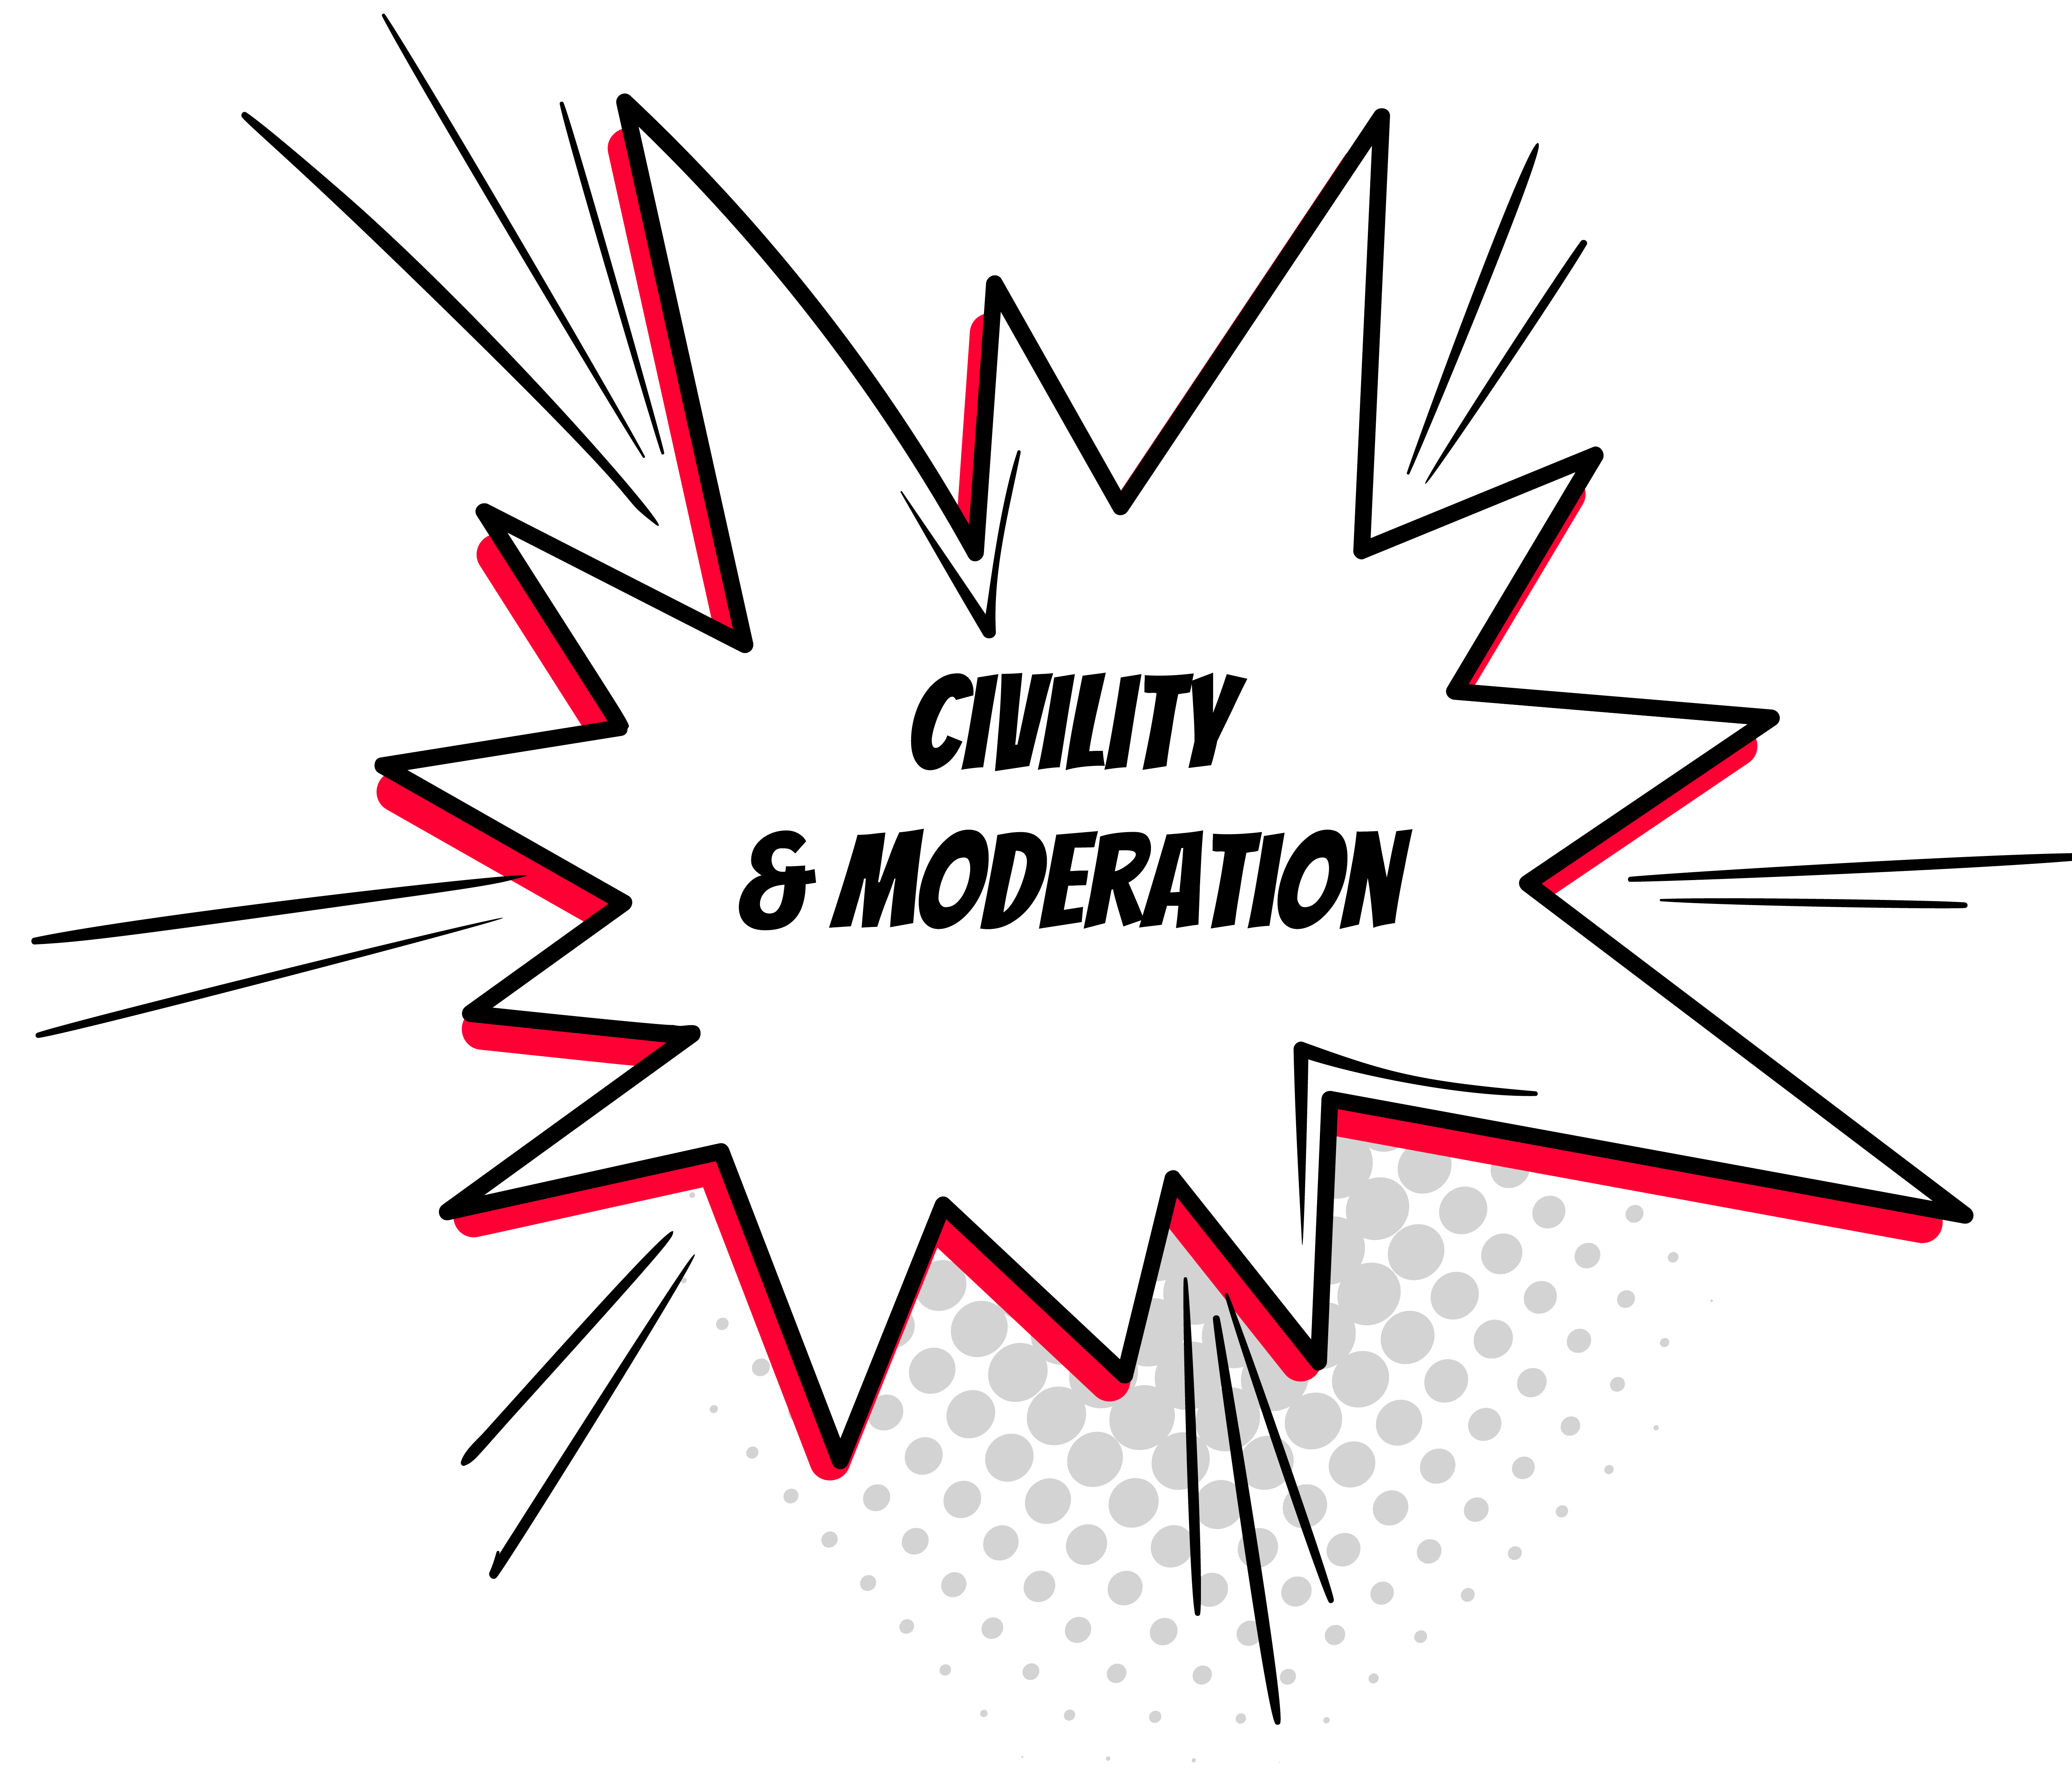 civility & moderation